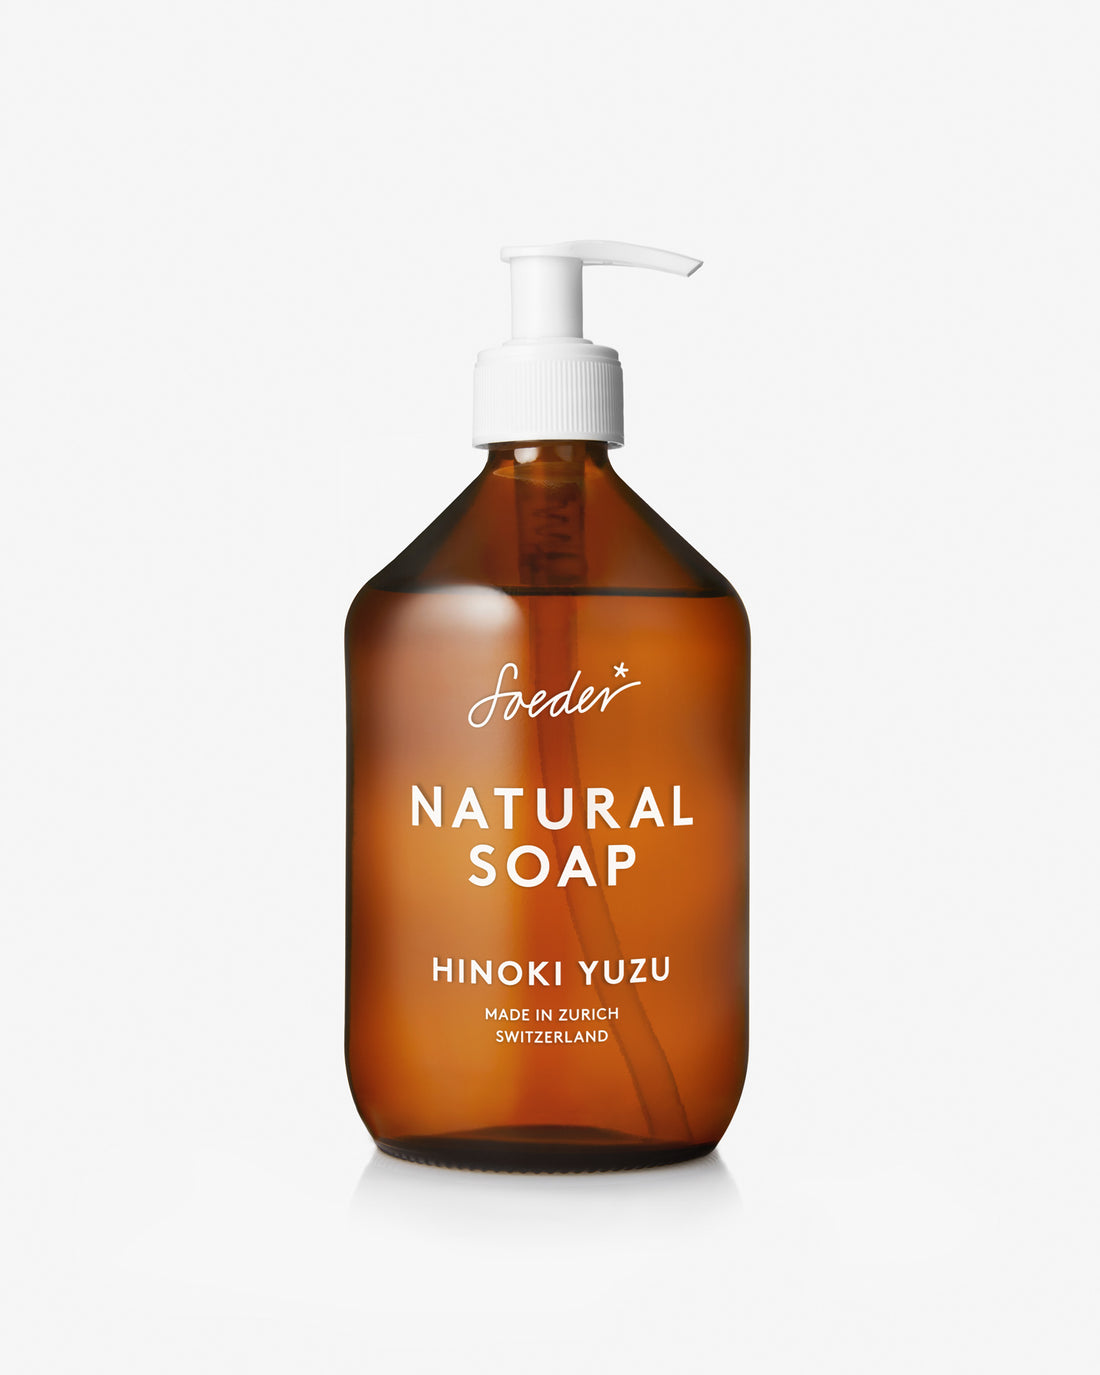 NATURAL SOAP HINOKI YUZU - Fibres de soja